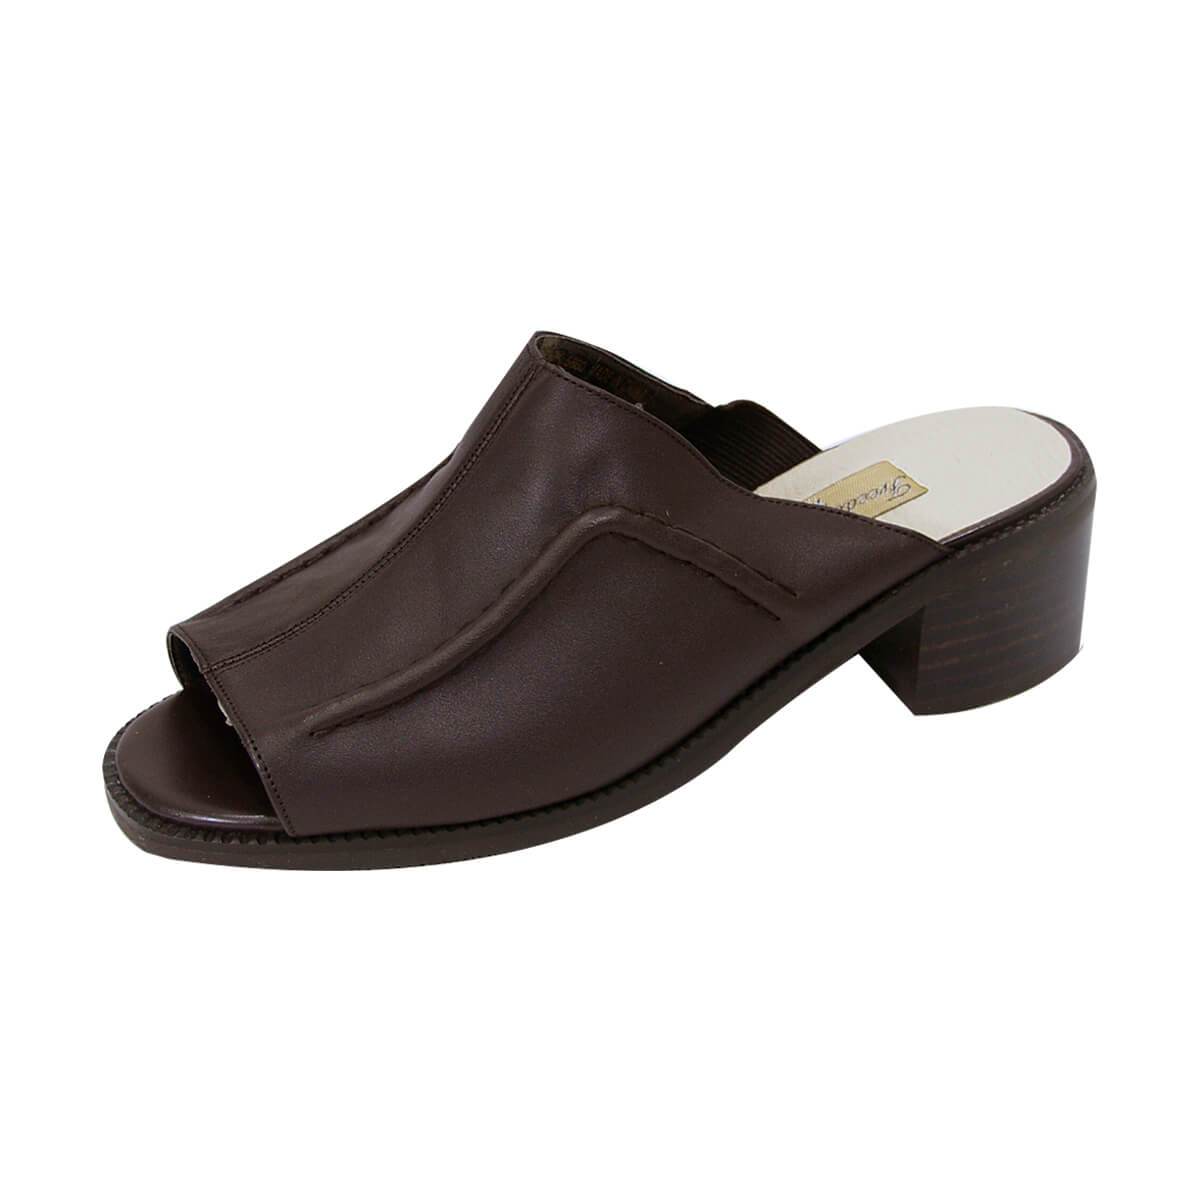 Peerage Patrice Women's Wide Width Comfort Leather Heeled Sandals